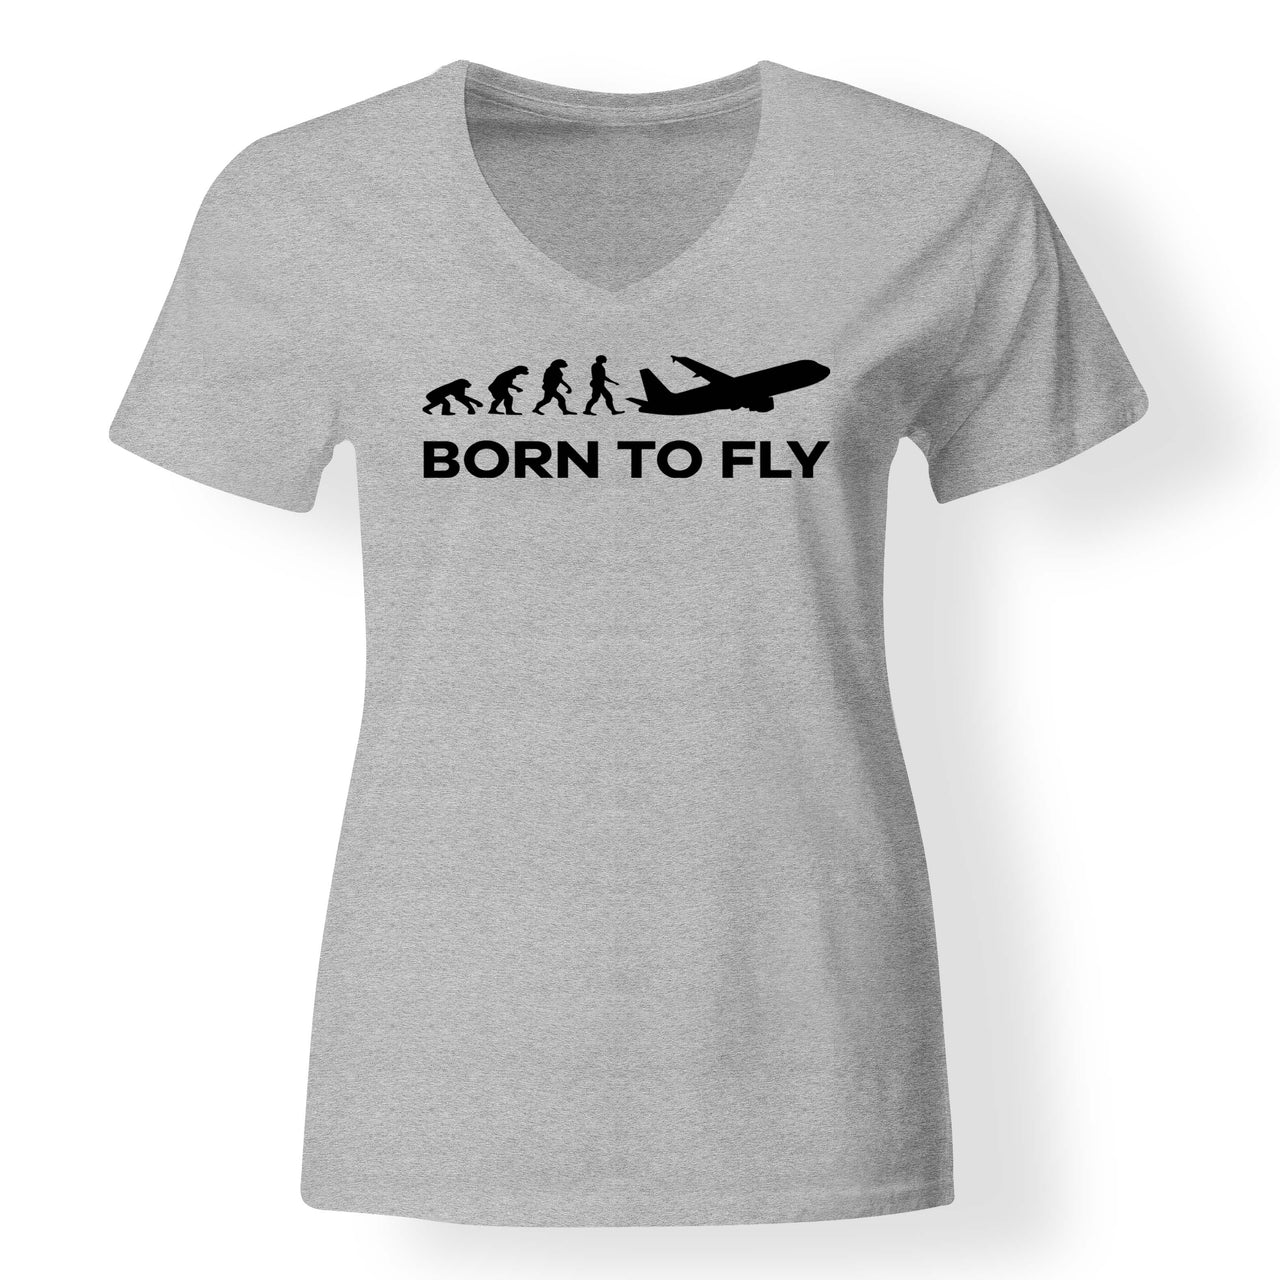 Born To Fly Designed V-Neck T-Shirts